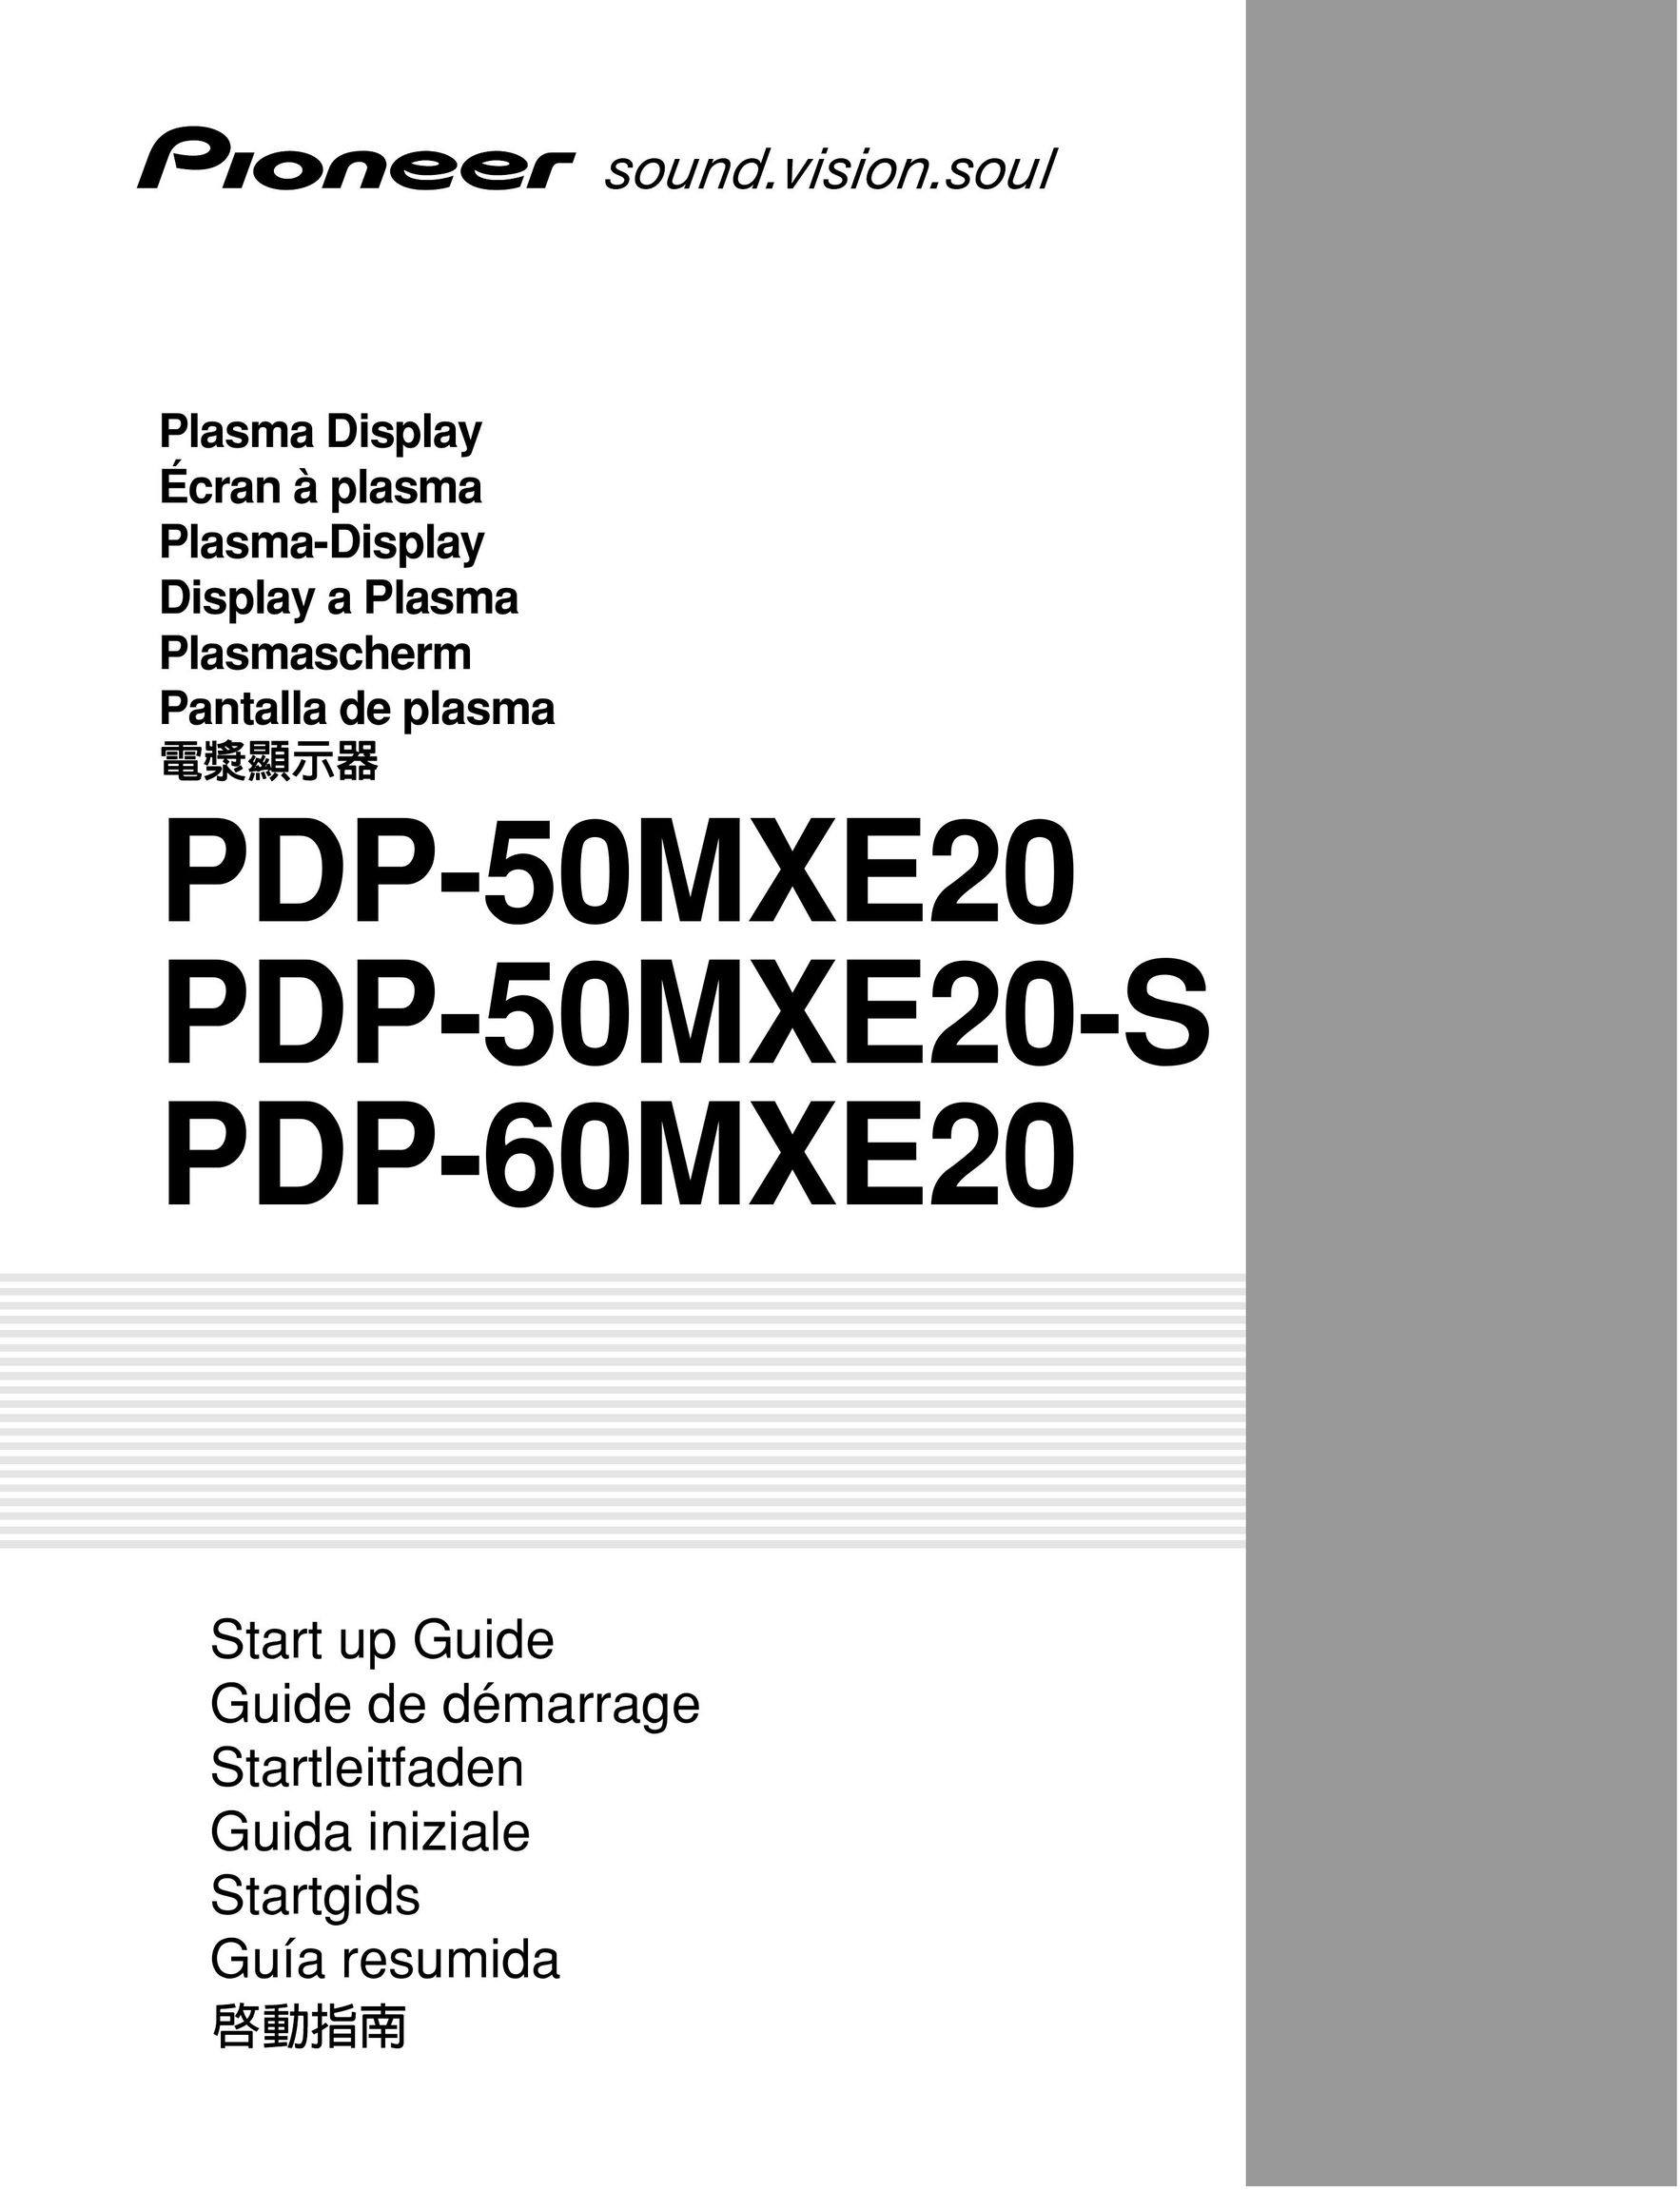 Pioneer PDP-50MXE20-S Projector User Manual